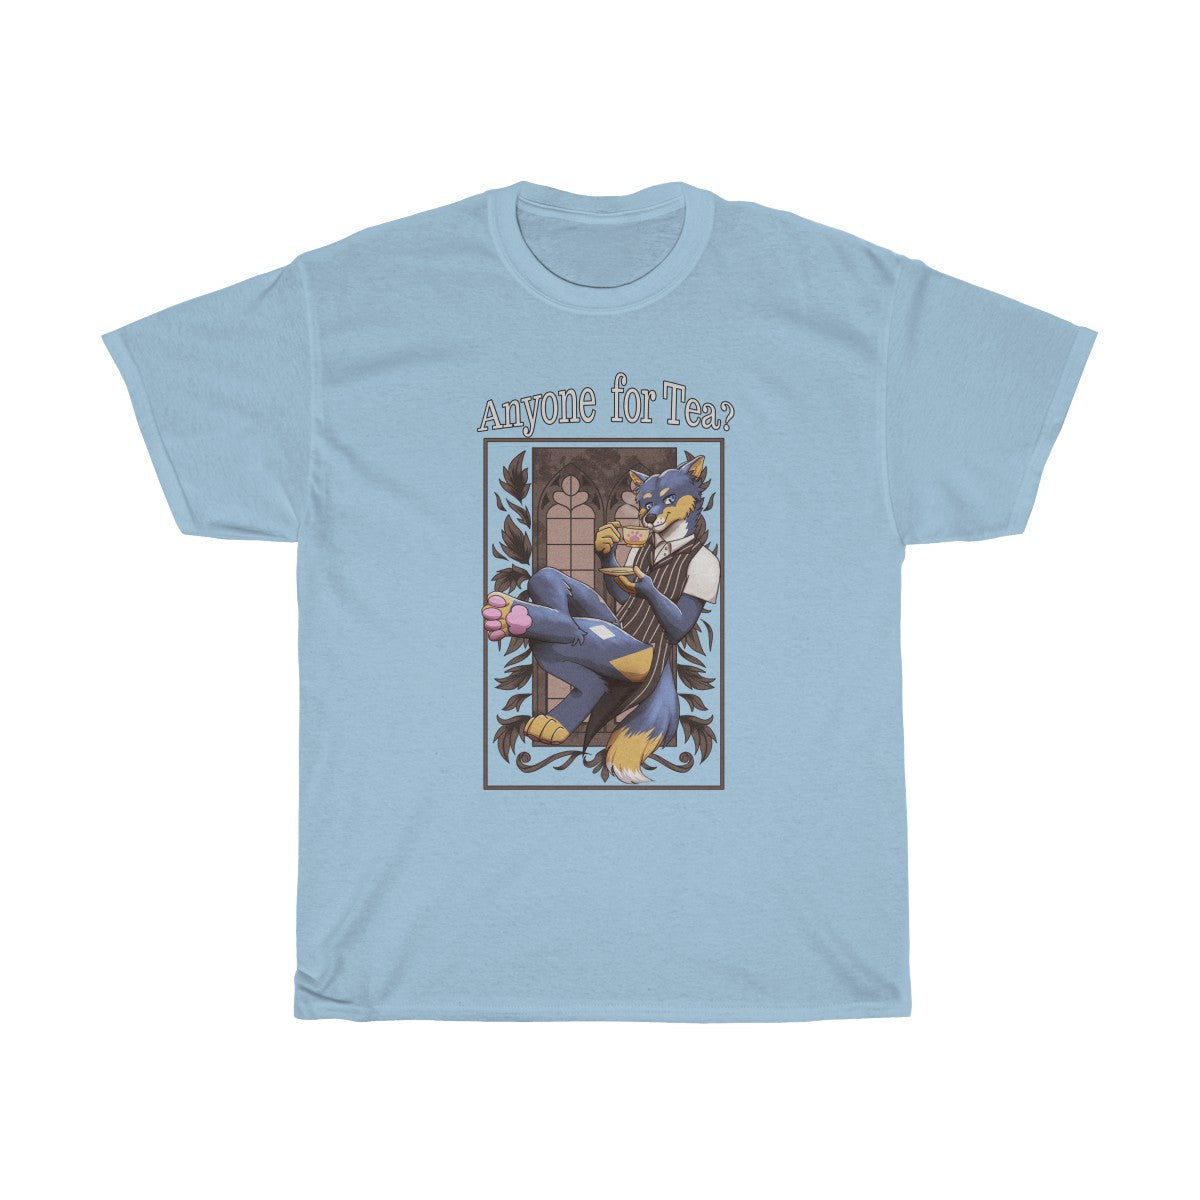 Anyone for Tea? - T-Shirt T-Shirt Artemis Wishfoot Light Blue S 